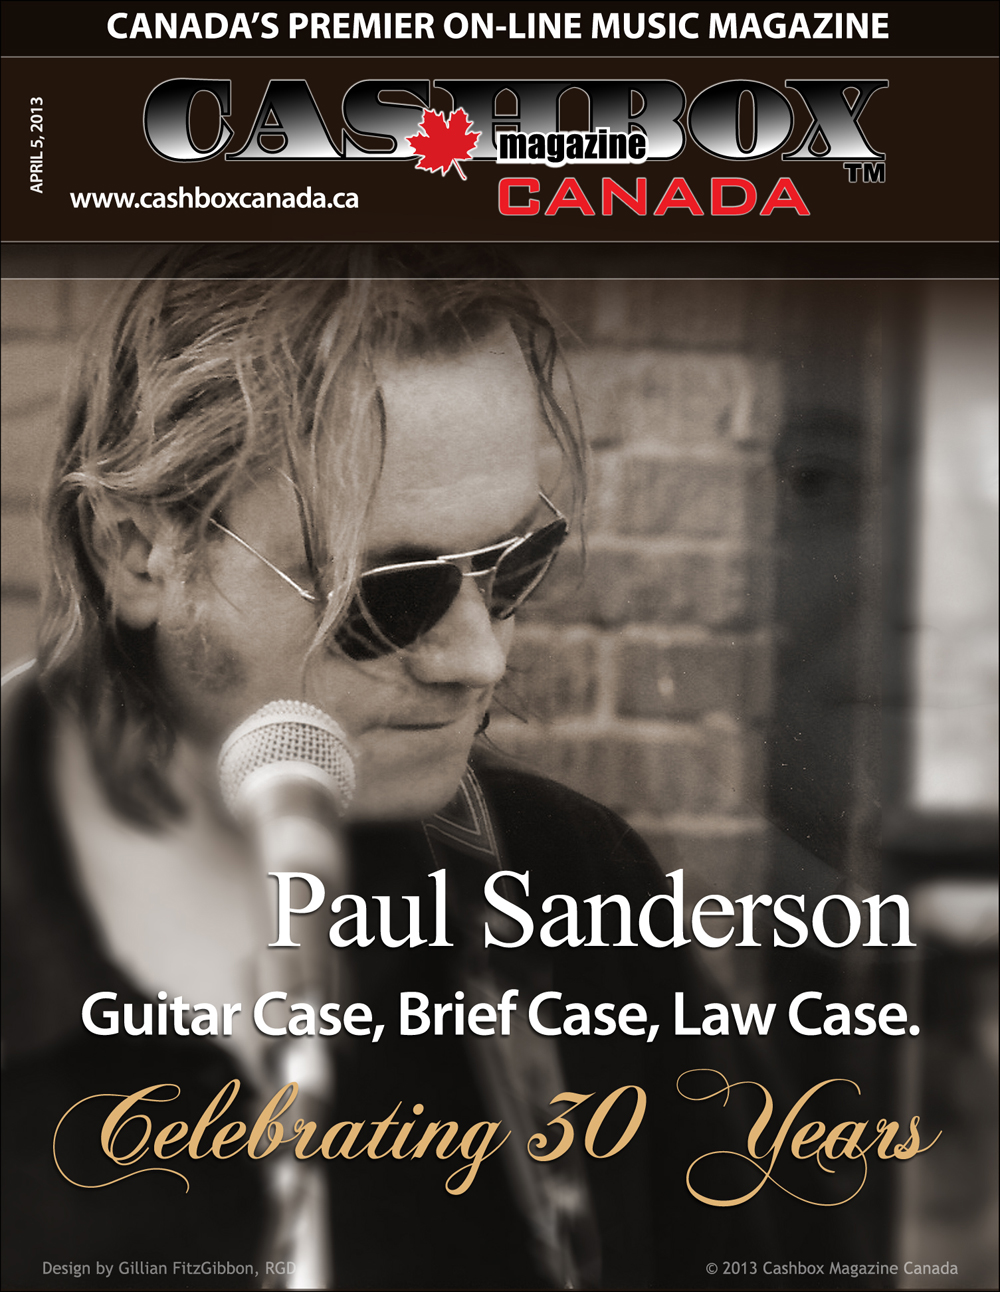 Paul Sanderson Guitar Case, Brief Case, Law Case Celebrating 30 Years